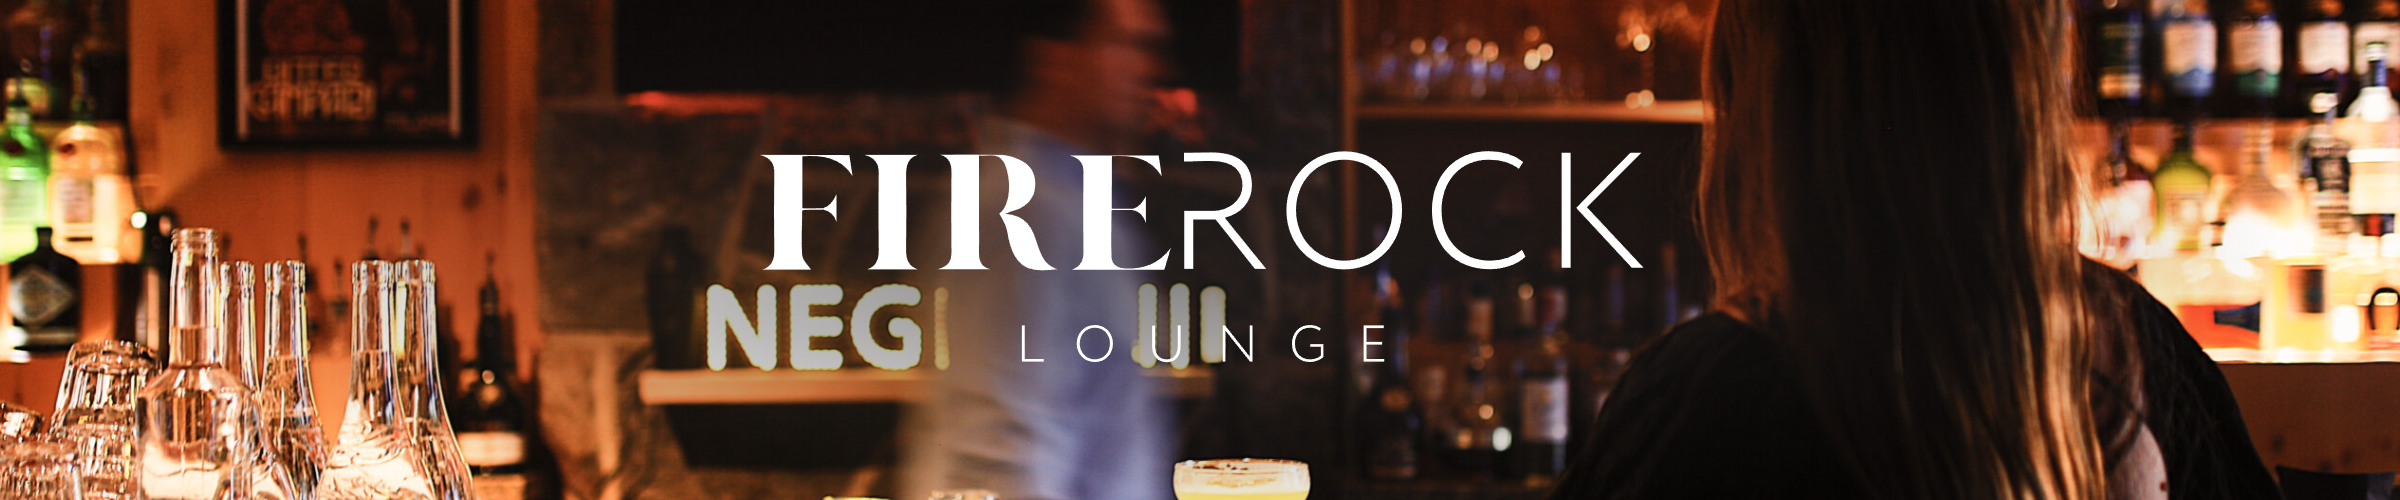 The FireRock Lounge